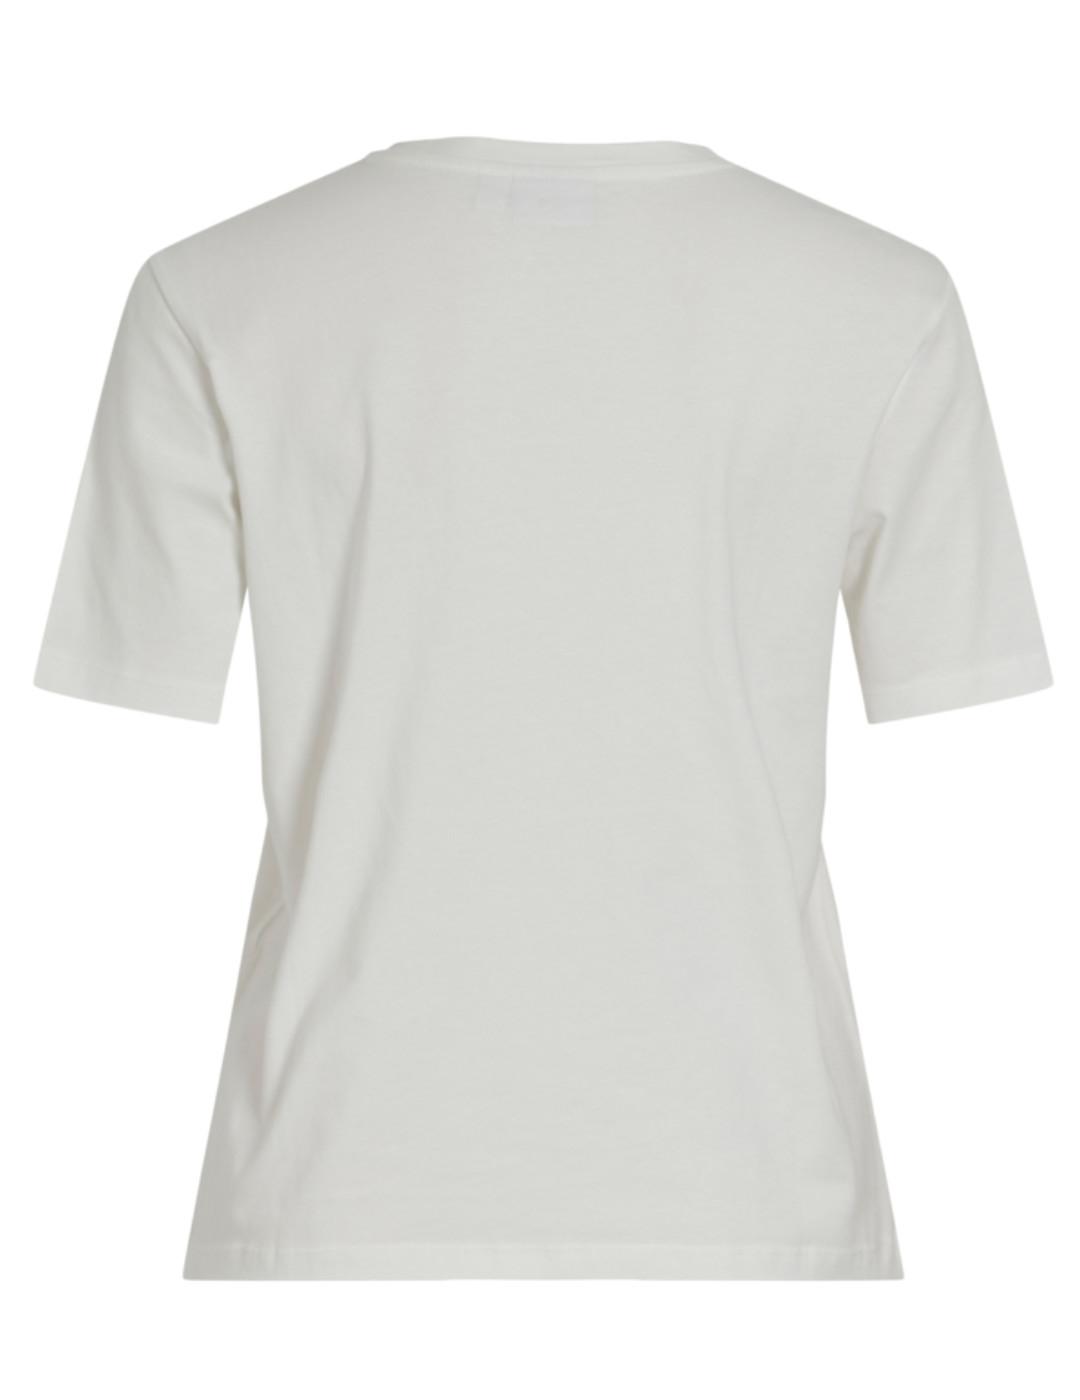 Camiseta Vila Sybil Balance blanca manga corta para mujer